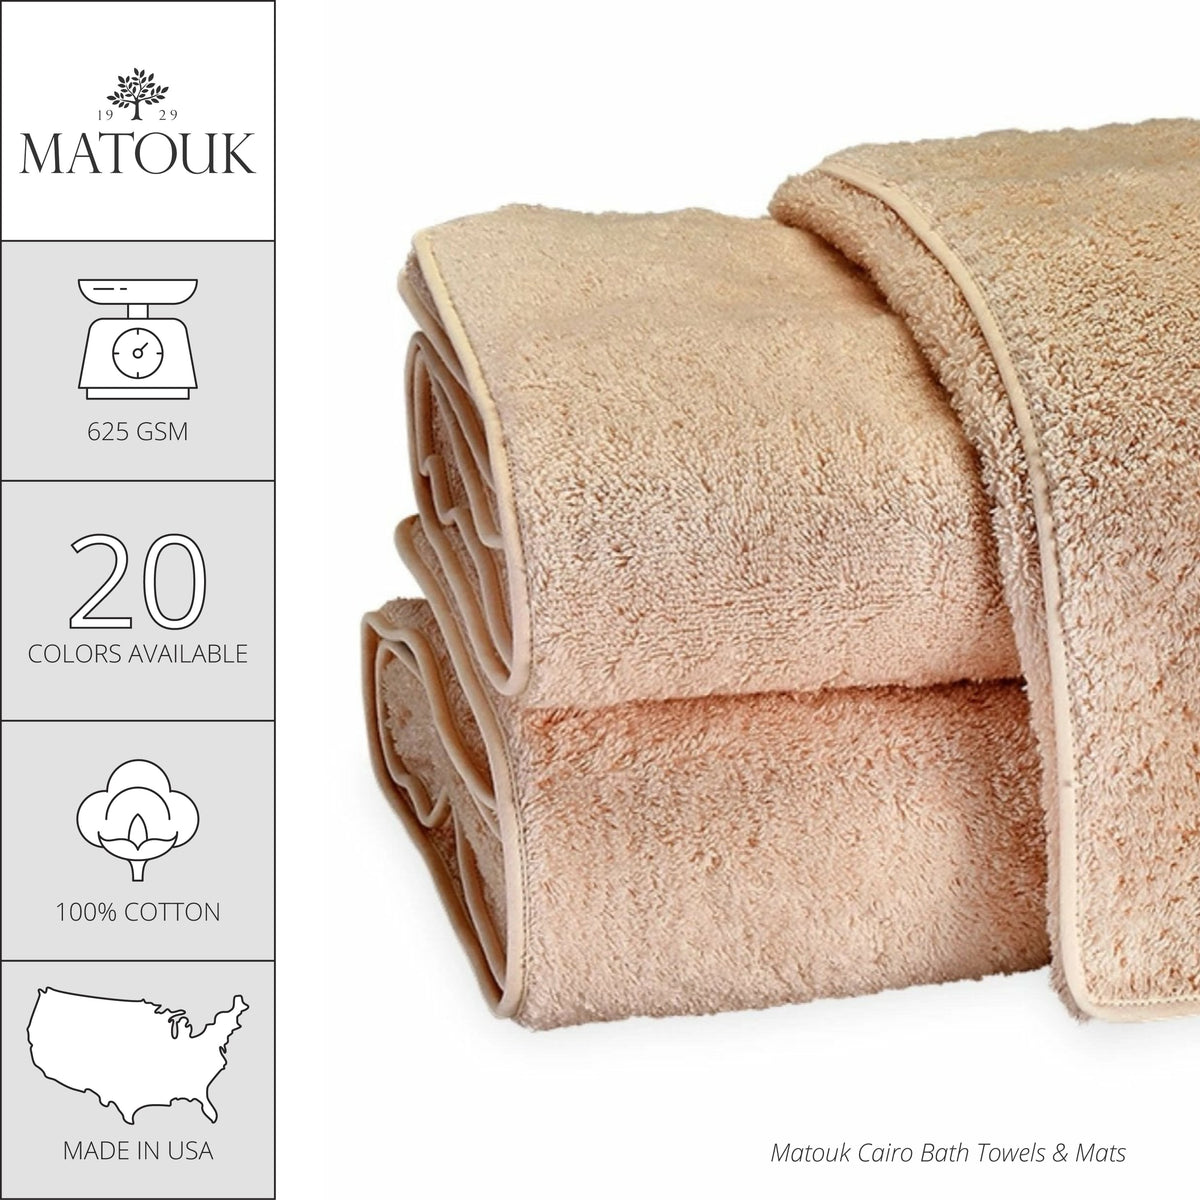 Matouk Cairo Bath Towels and Mats - White/Azure